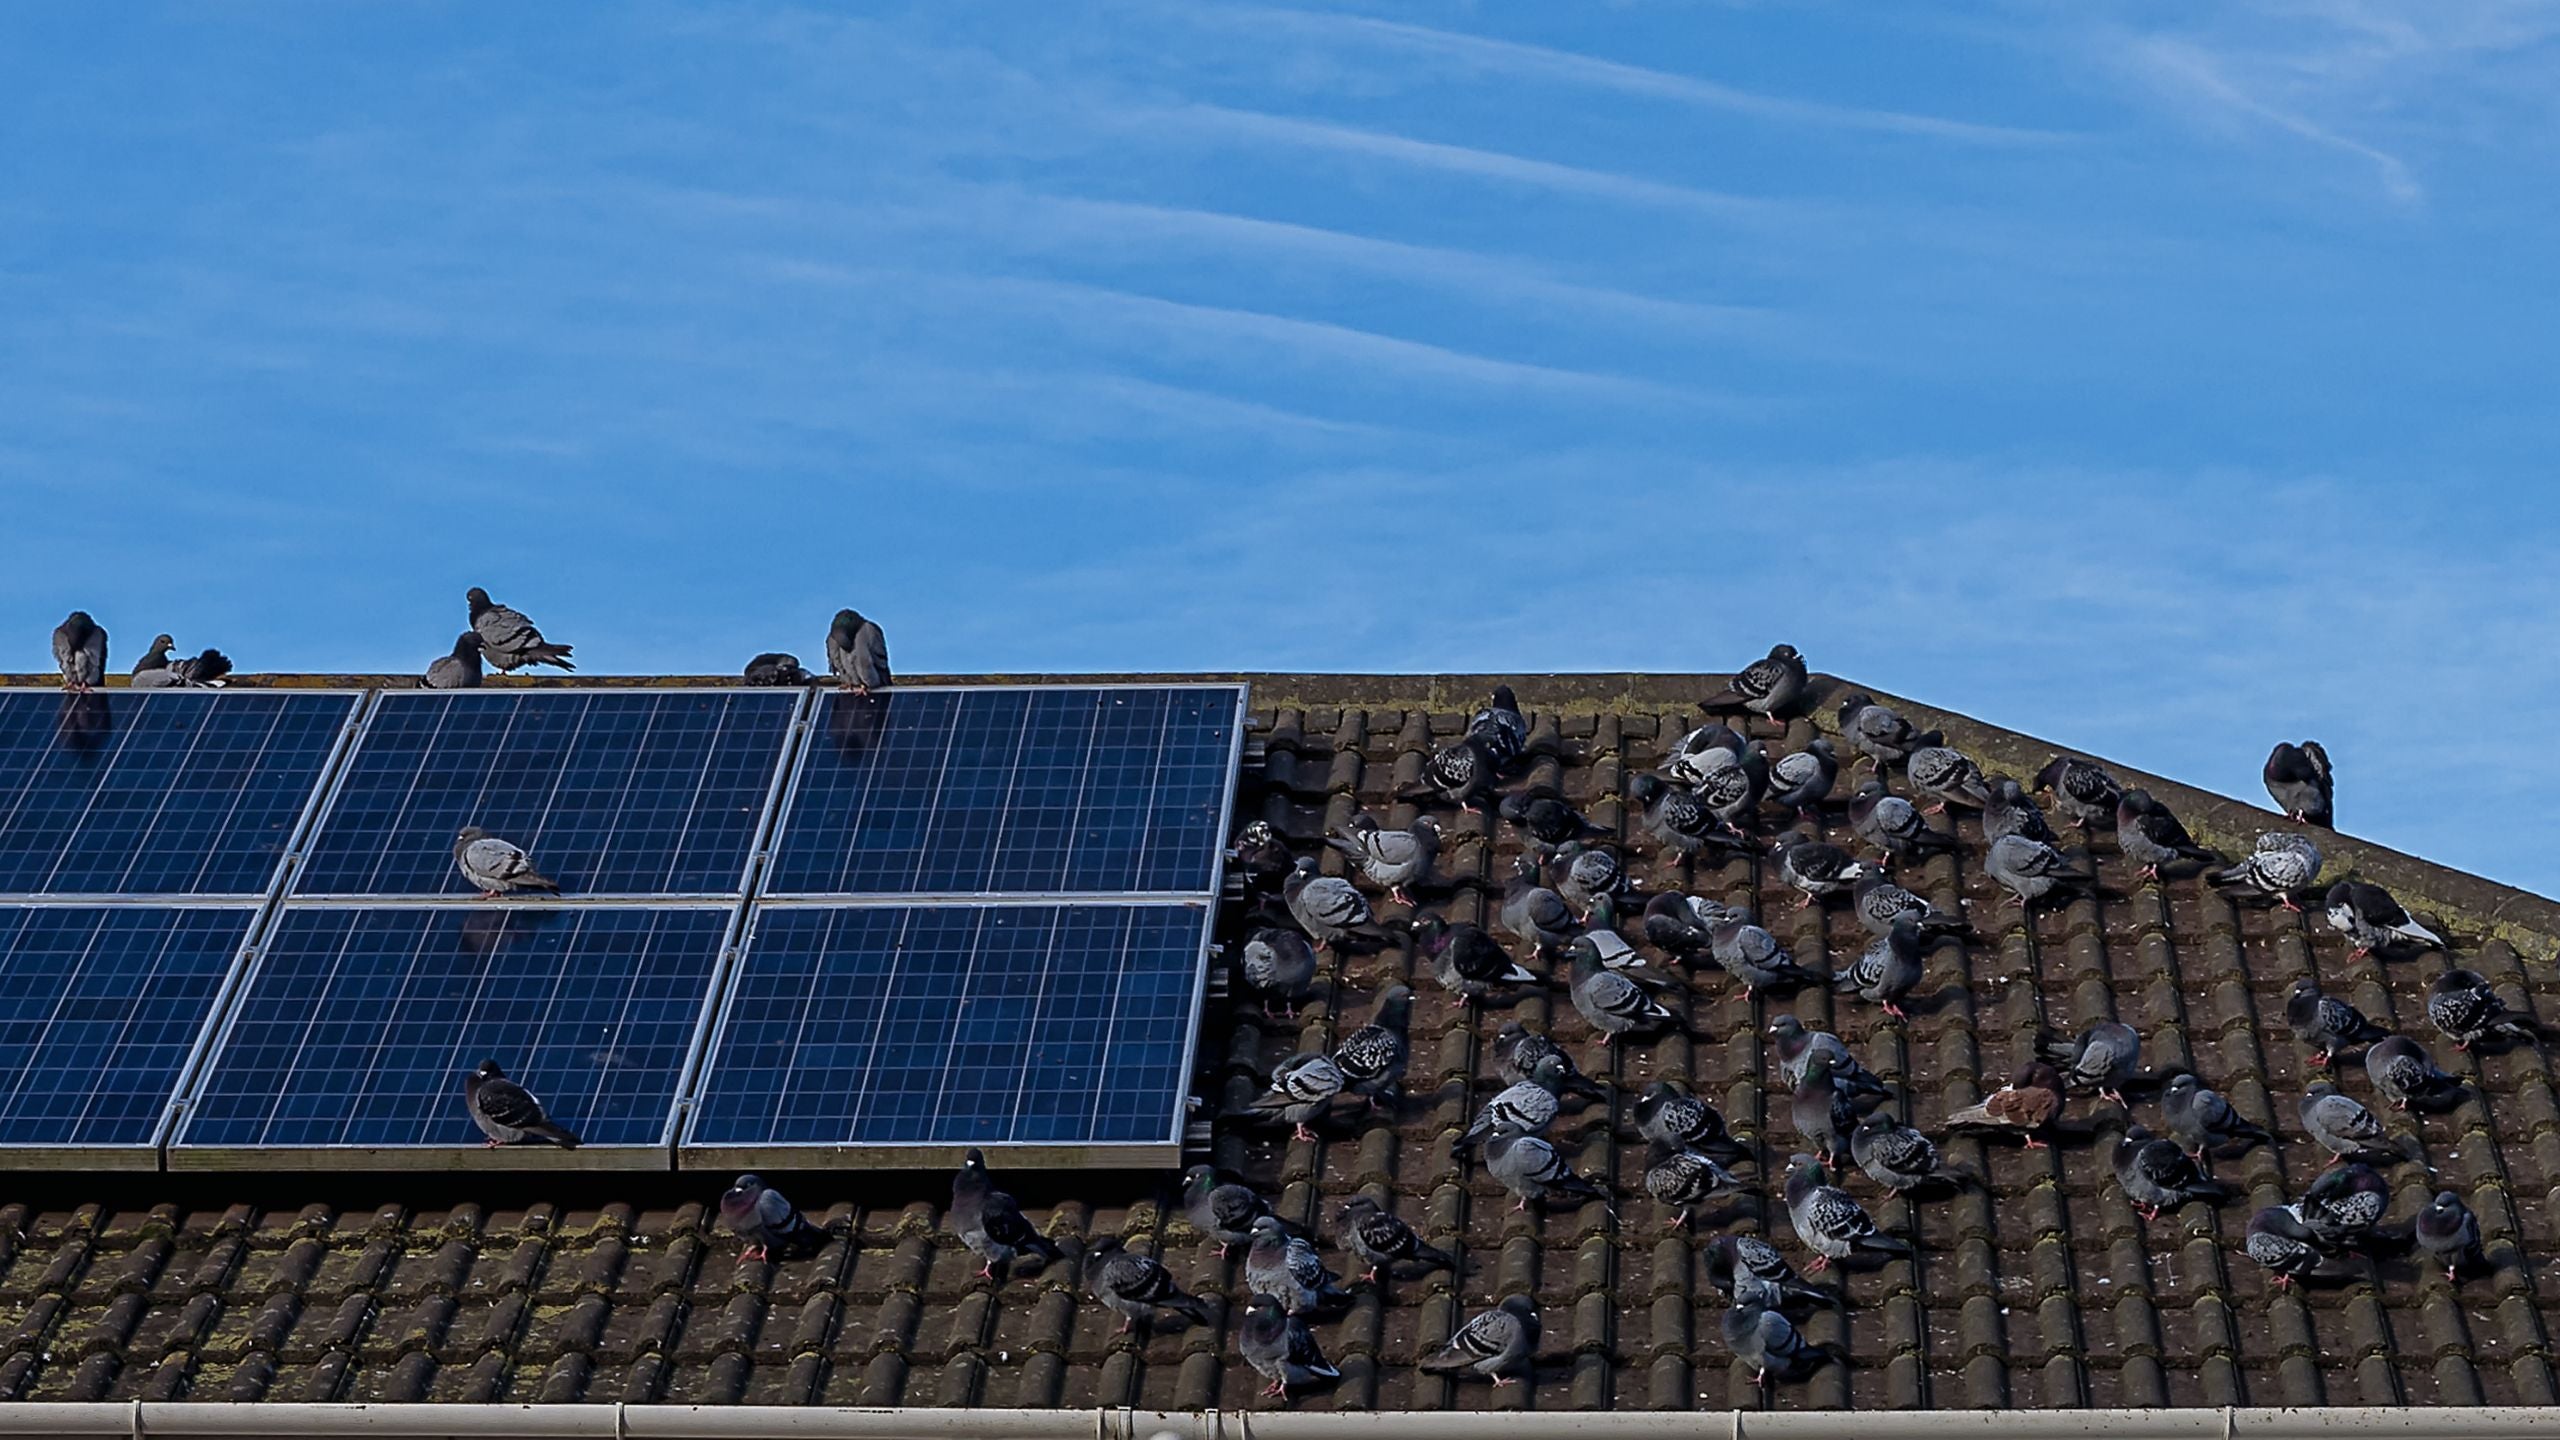 Pigeons nesting under solar panels